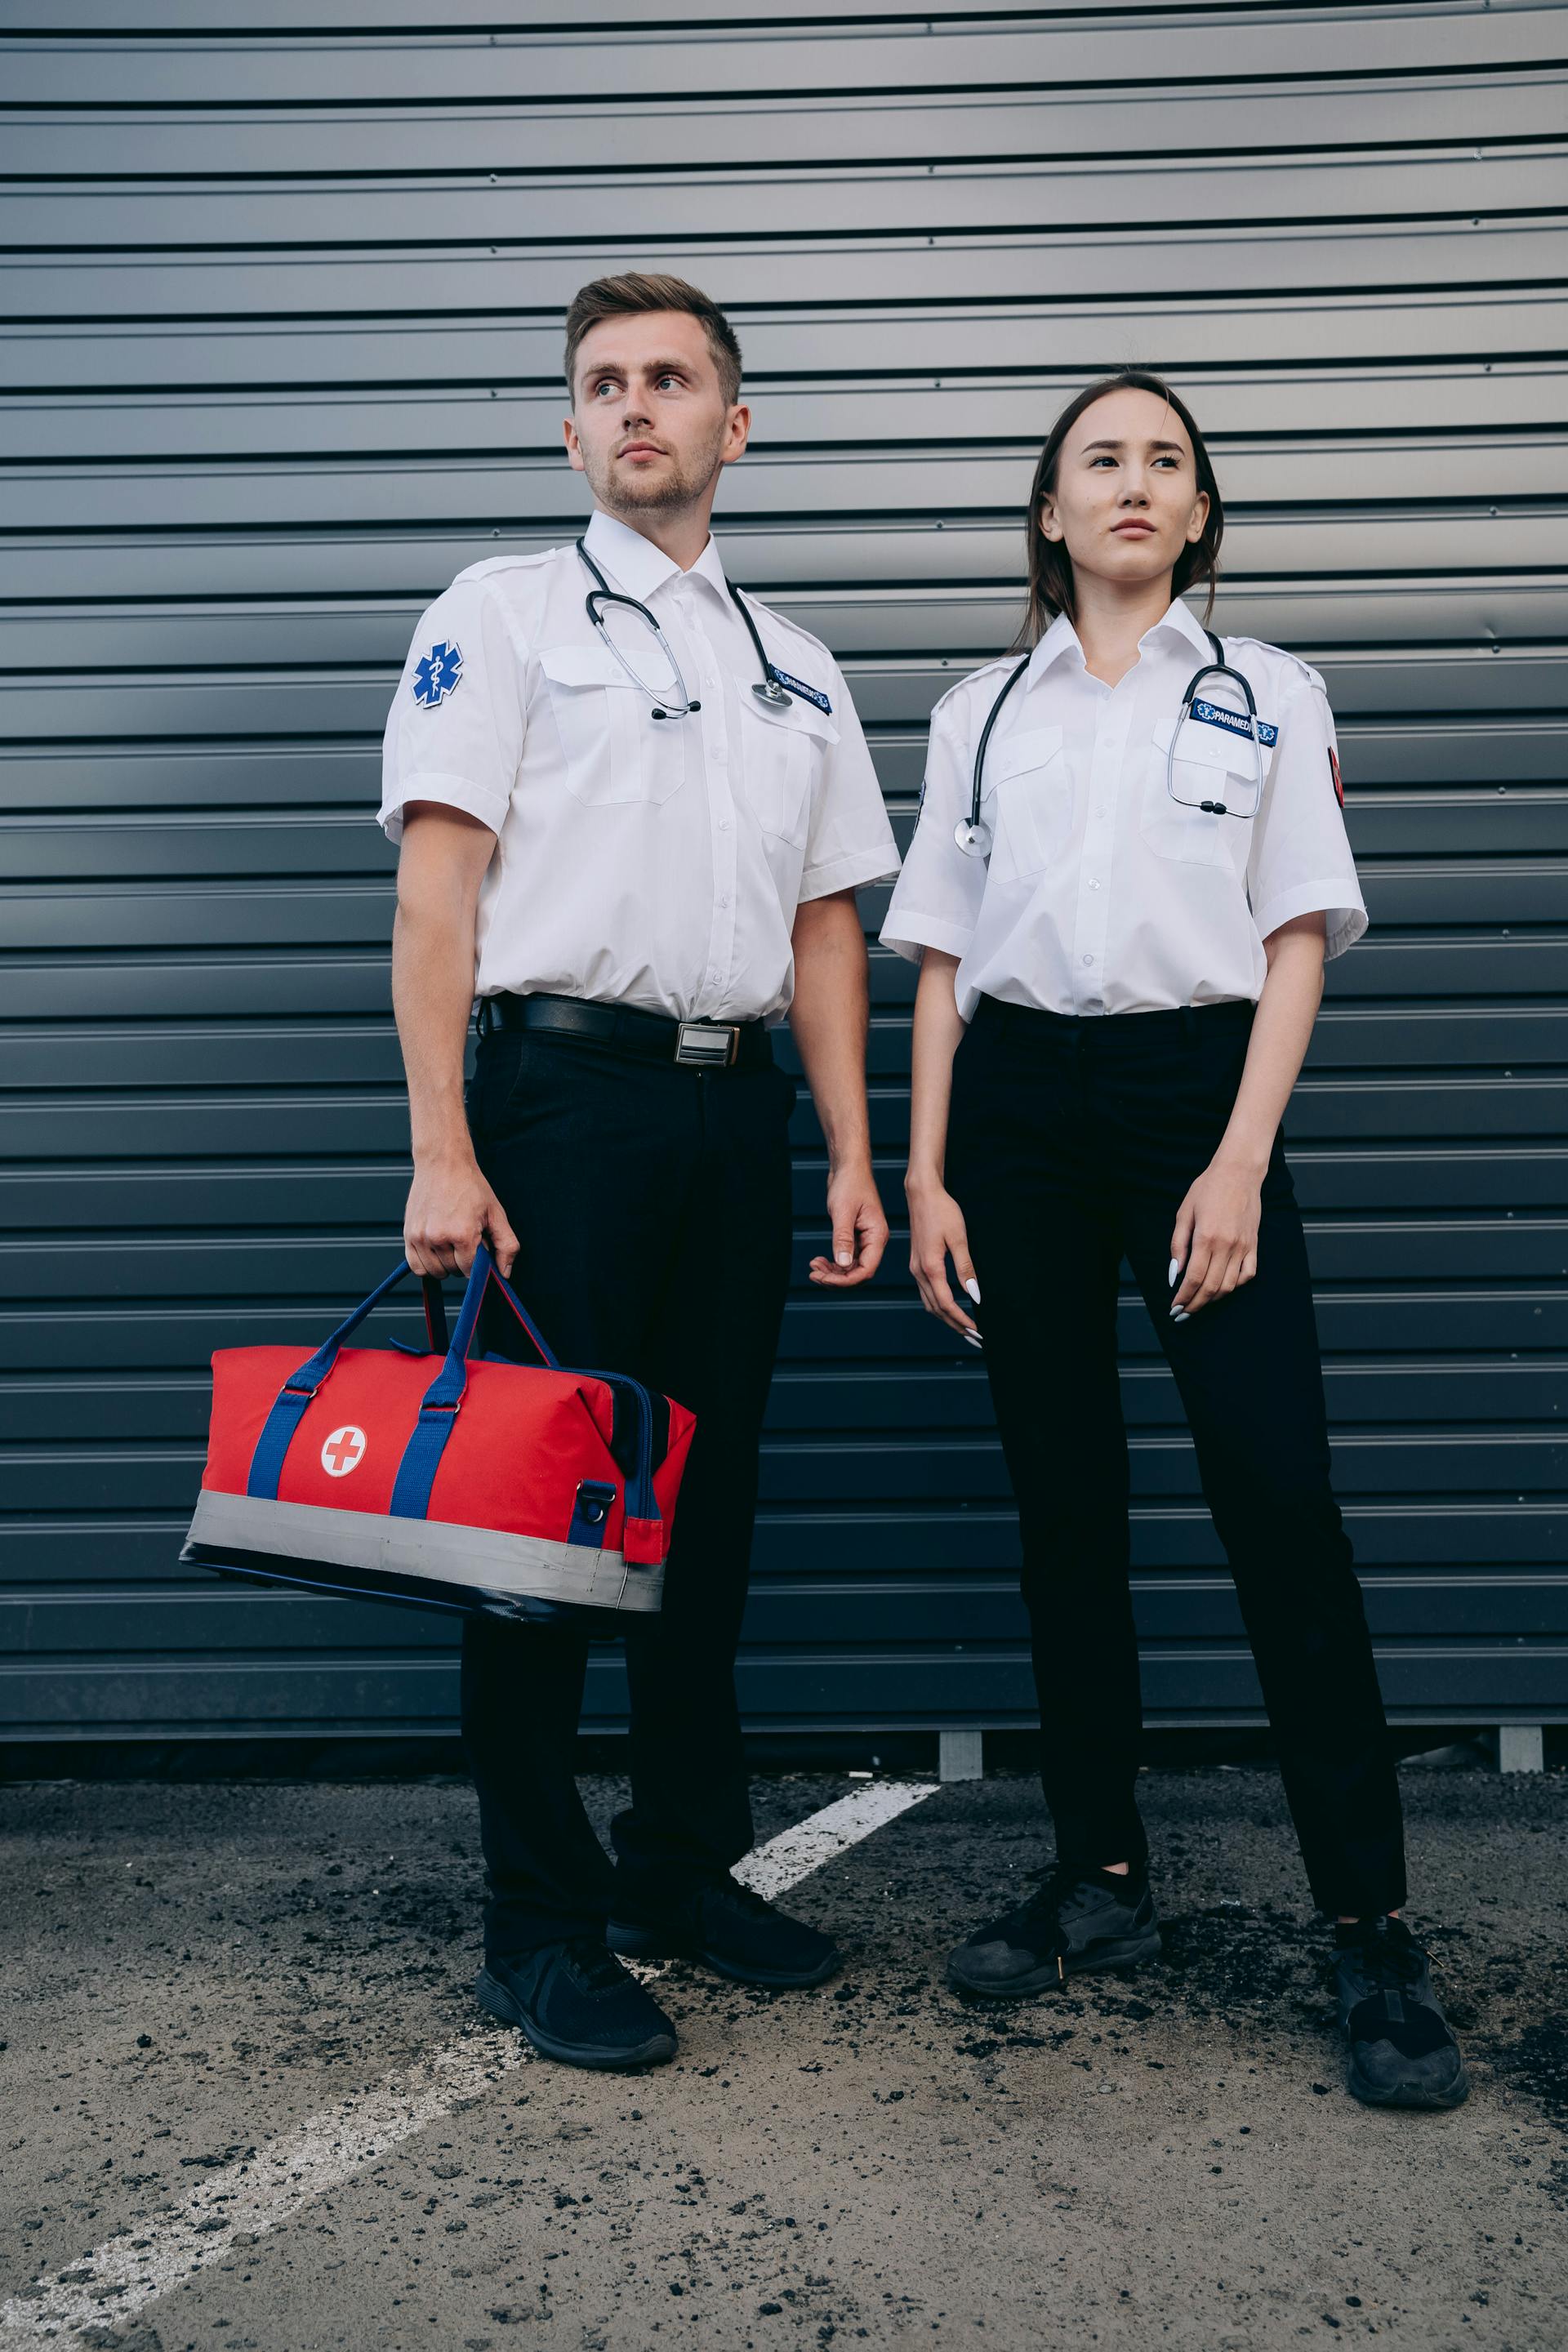 Two paramedics standing | Source: Pexels